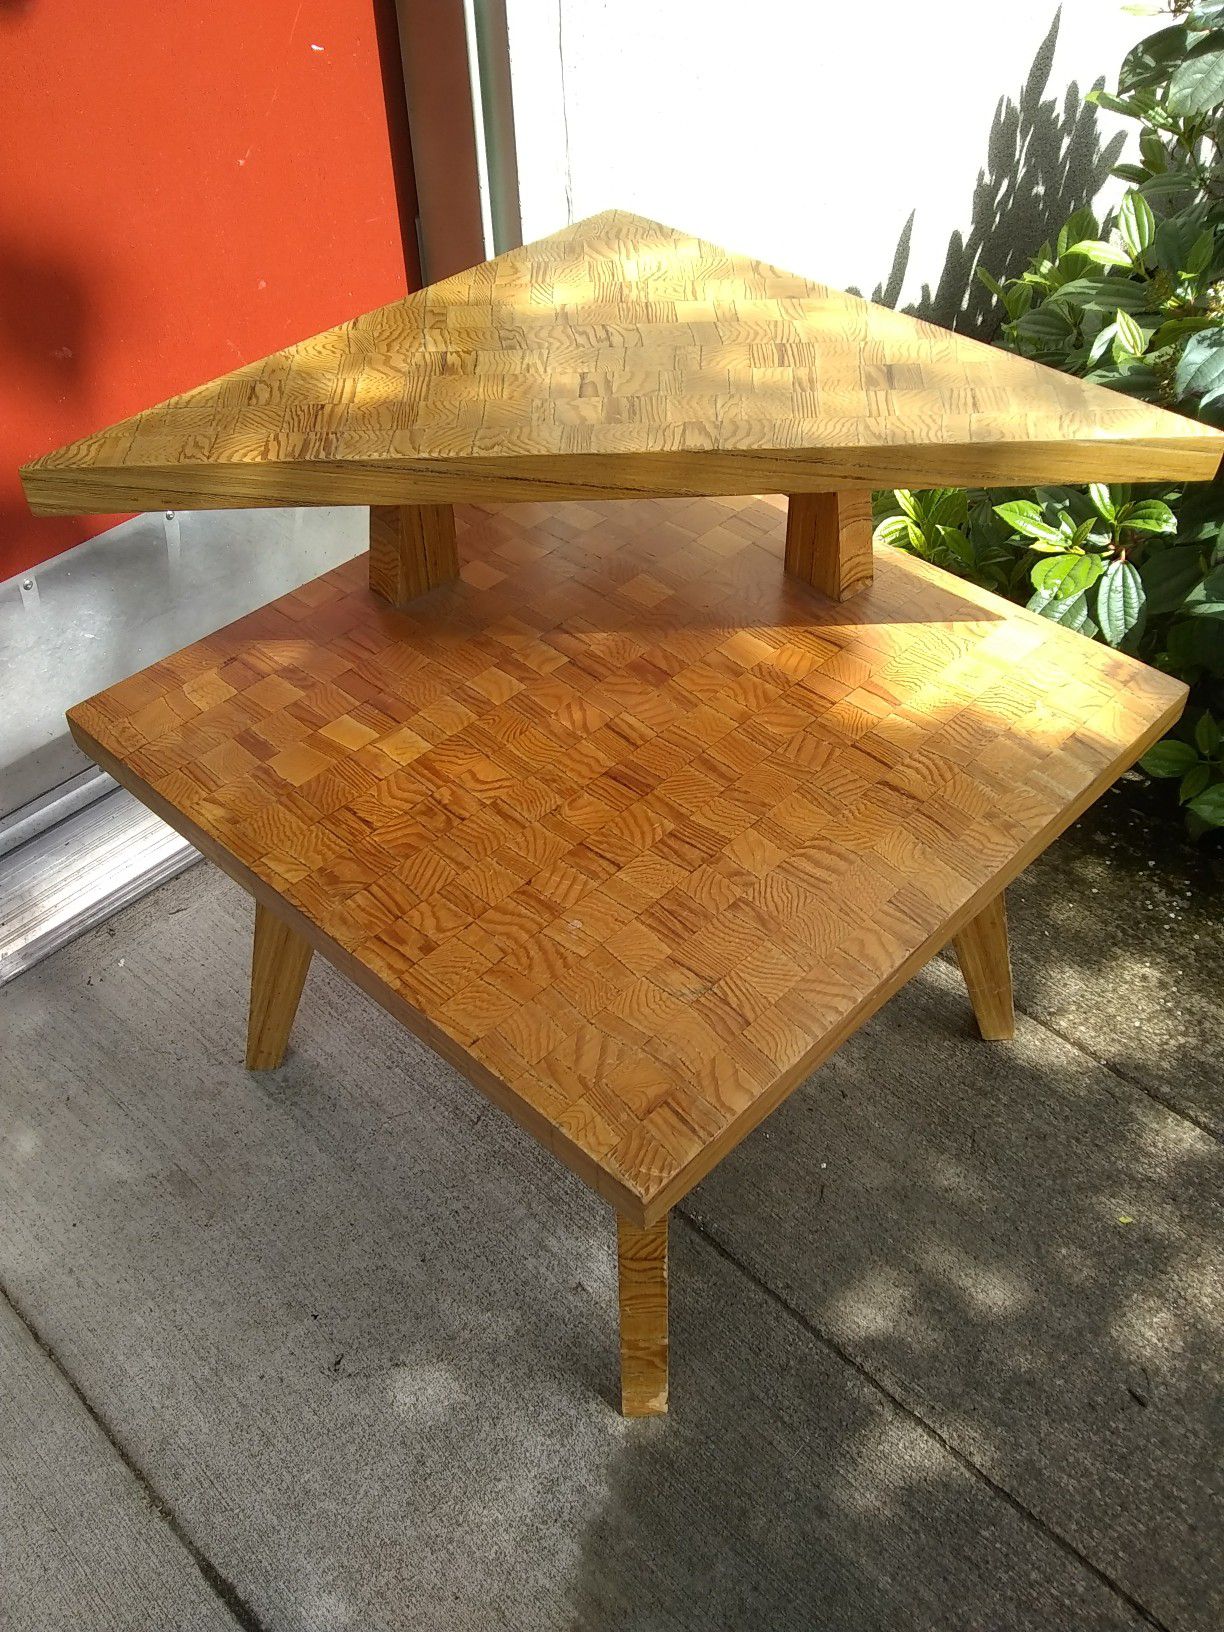 Handmade MCM table